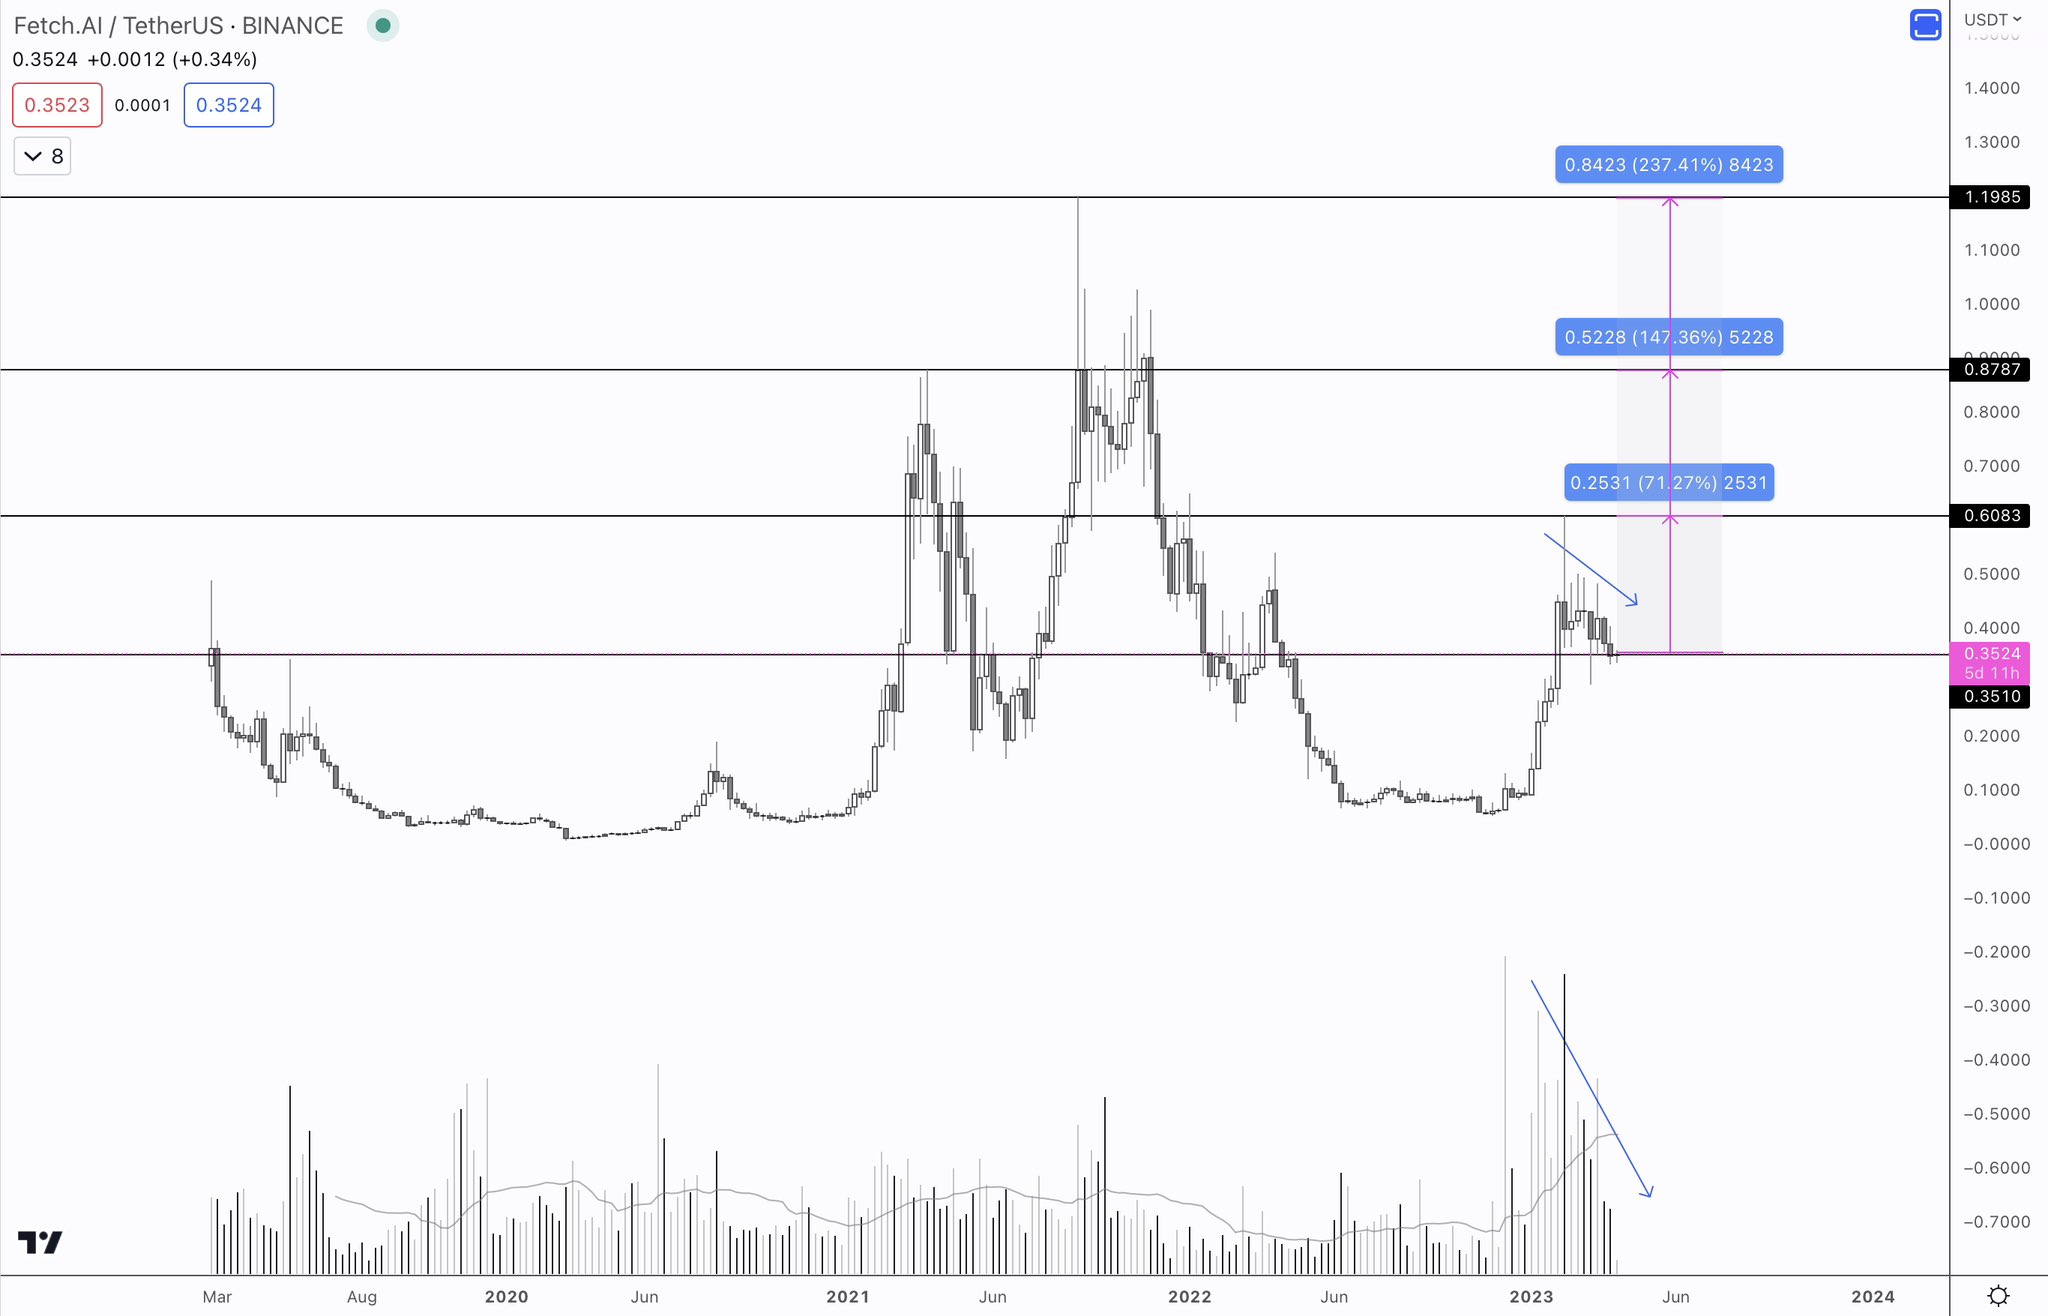 FET/USDT price chart